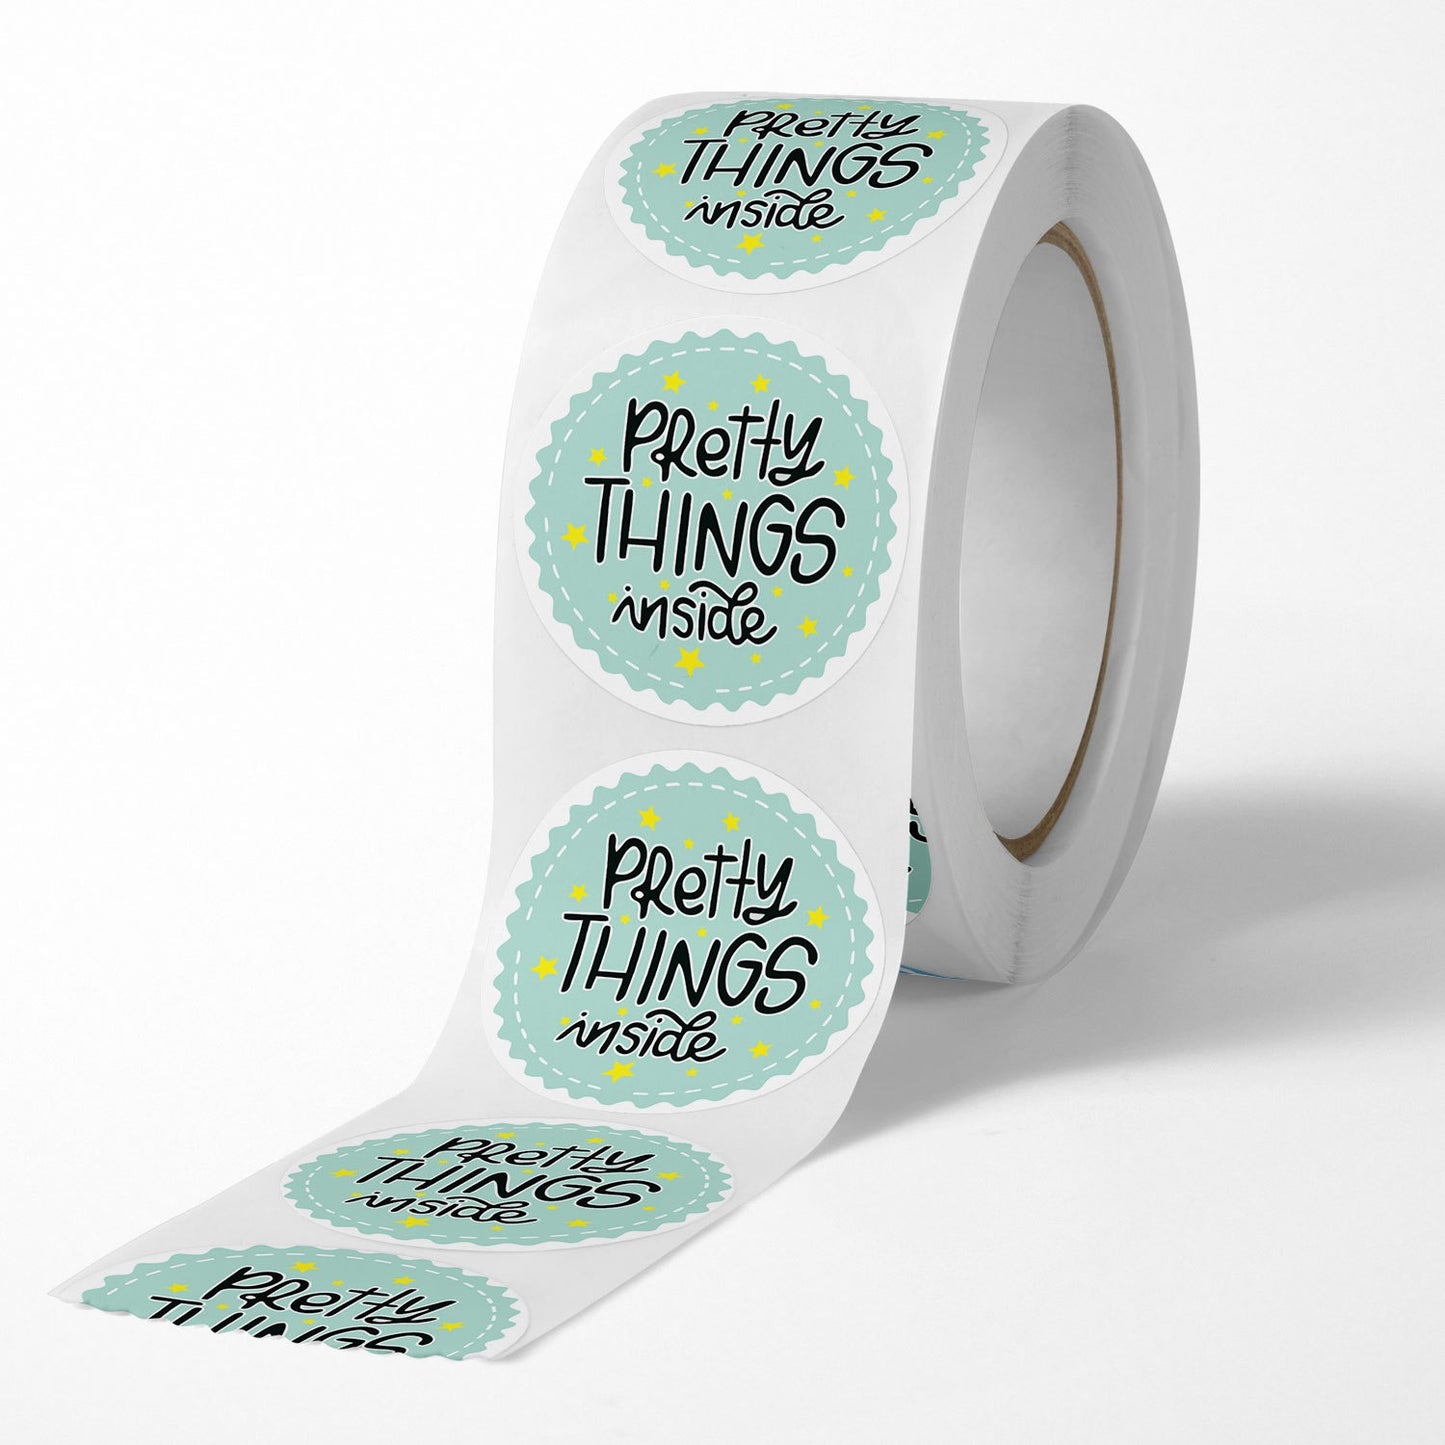 Pretty Things Insider 200 pcs Stickers Washi Roll